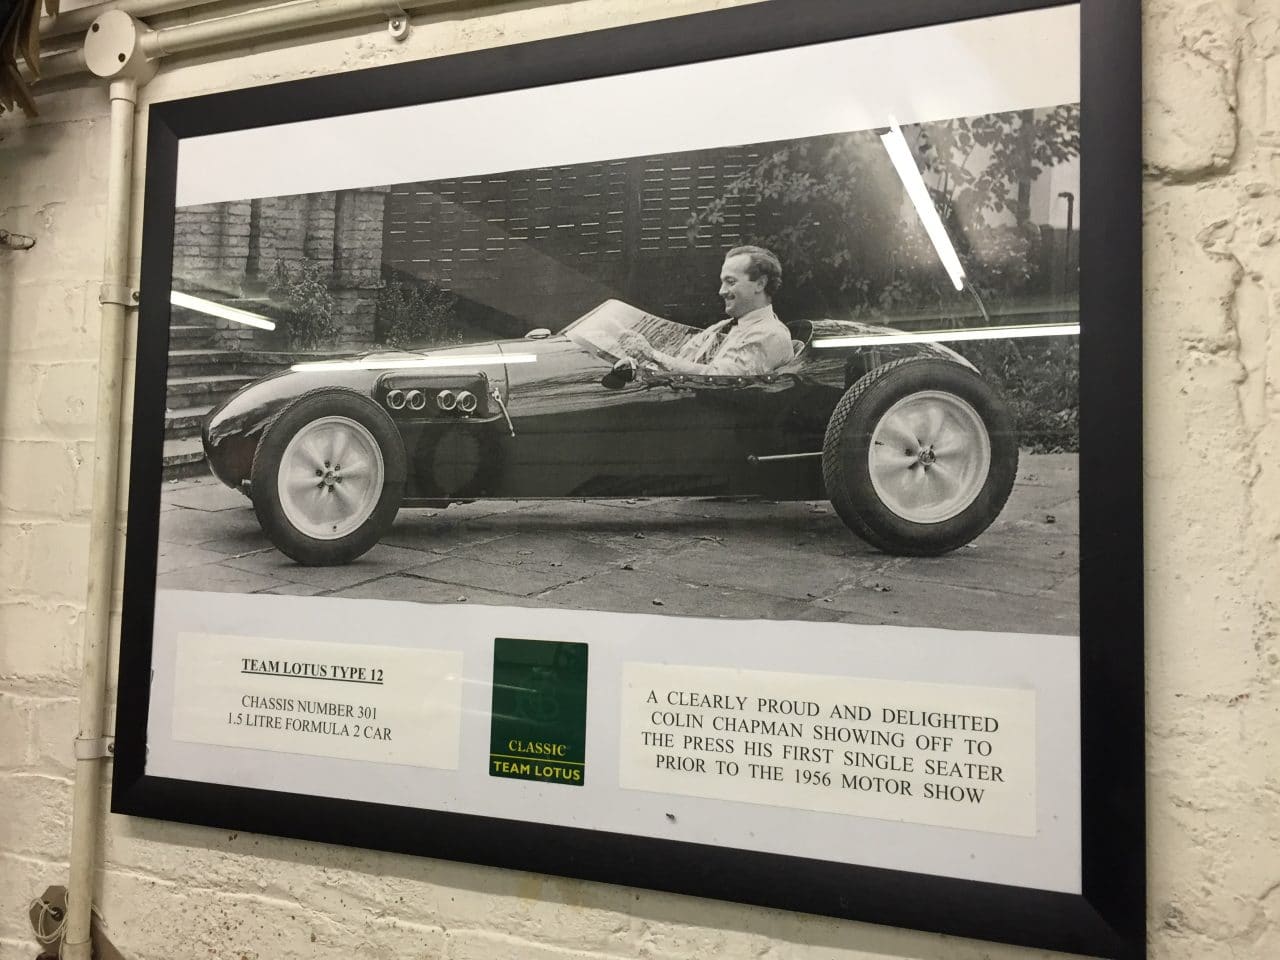 Colin Chapman Lotus type 12